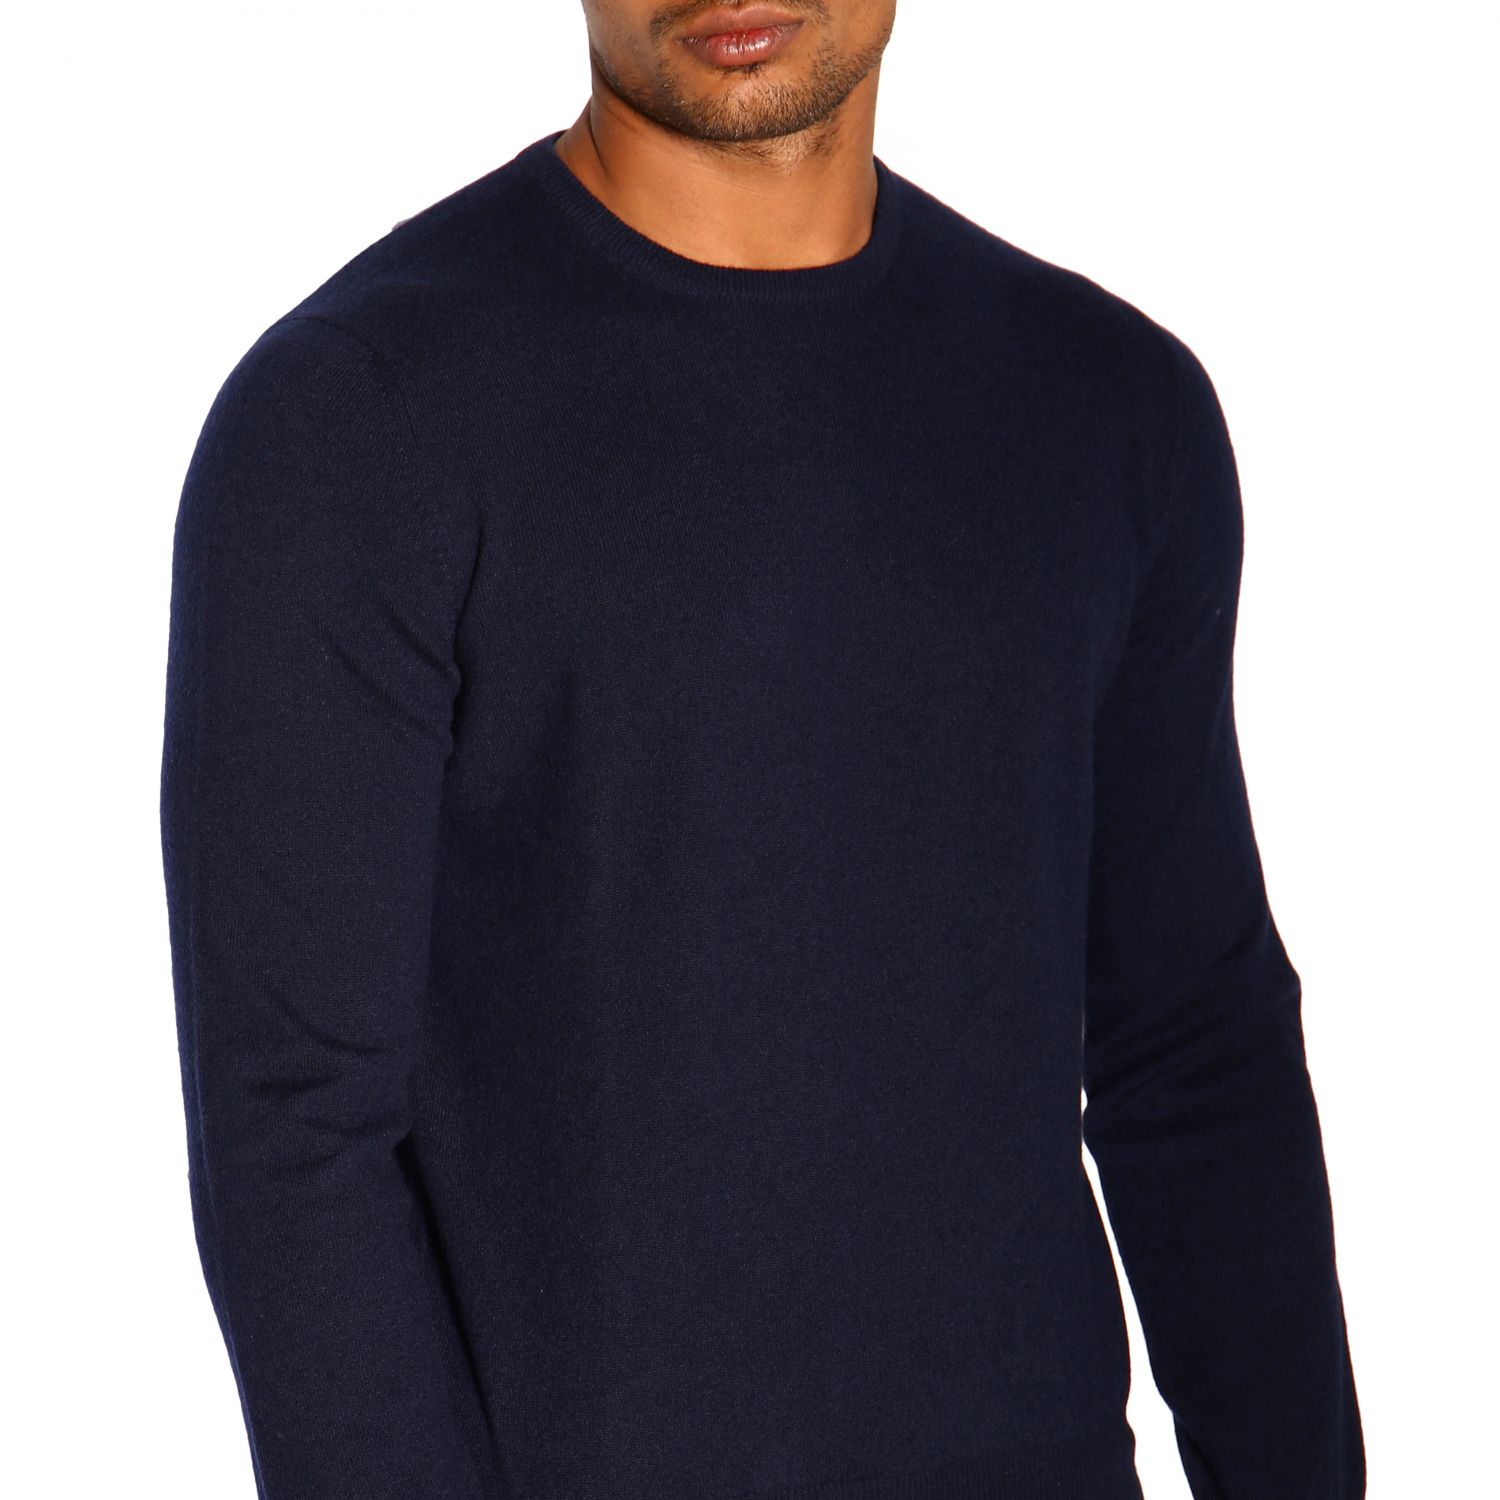 Gran Sasso Outlet: Sweatshirt men - Blue | Sweater Gran Sasso 55167 ...